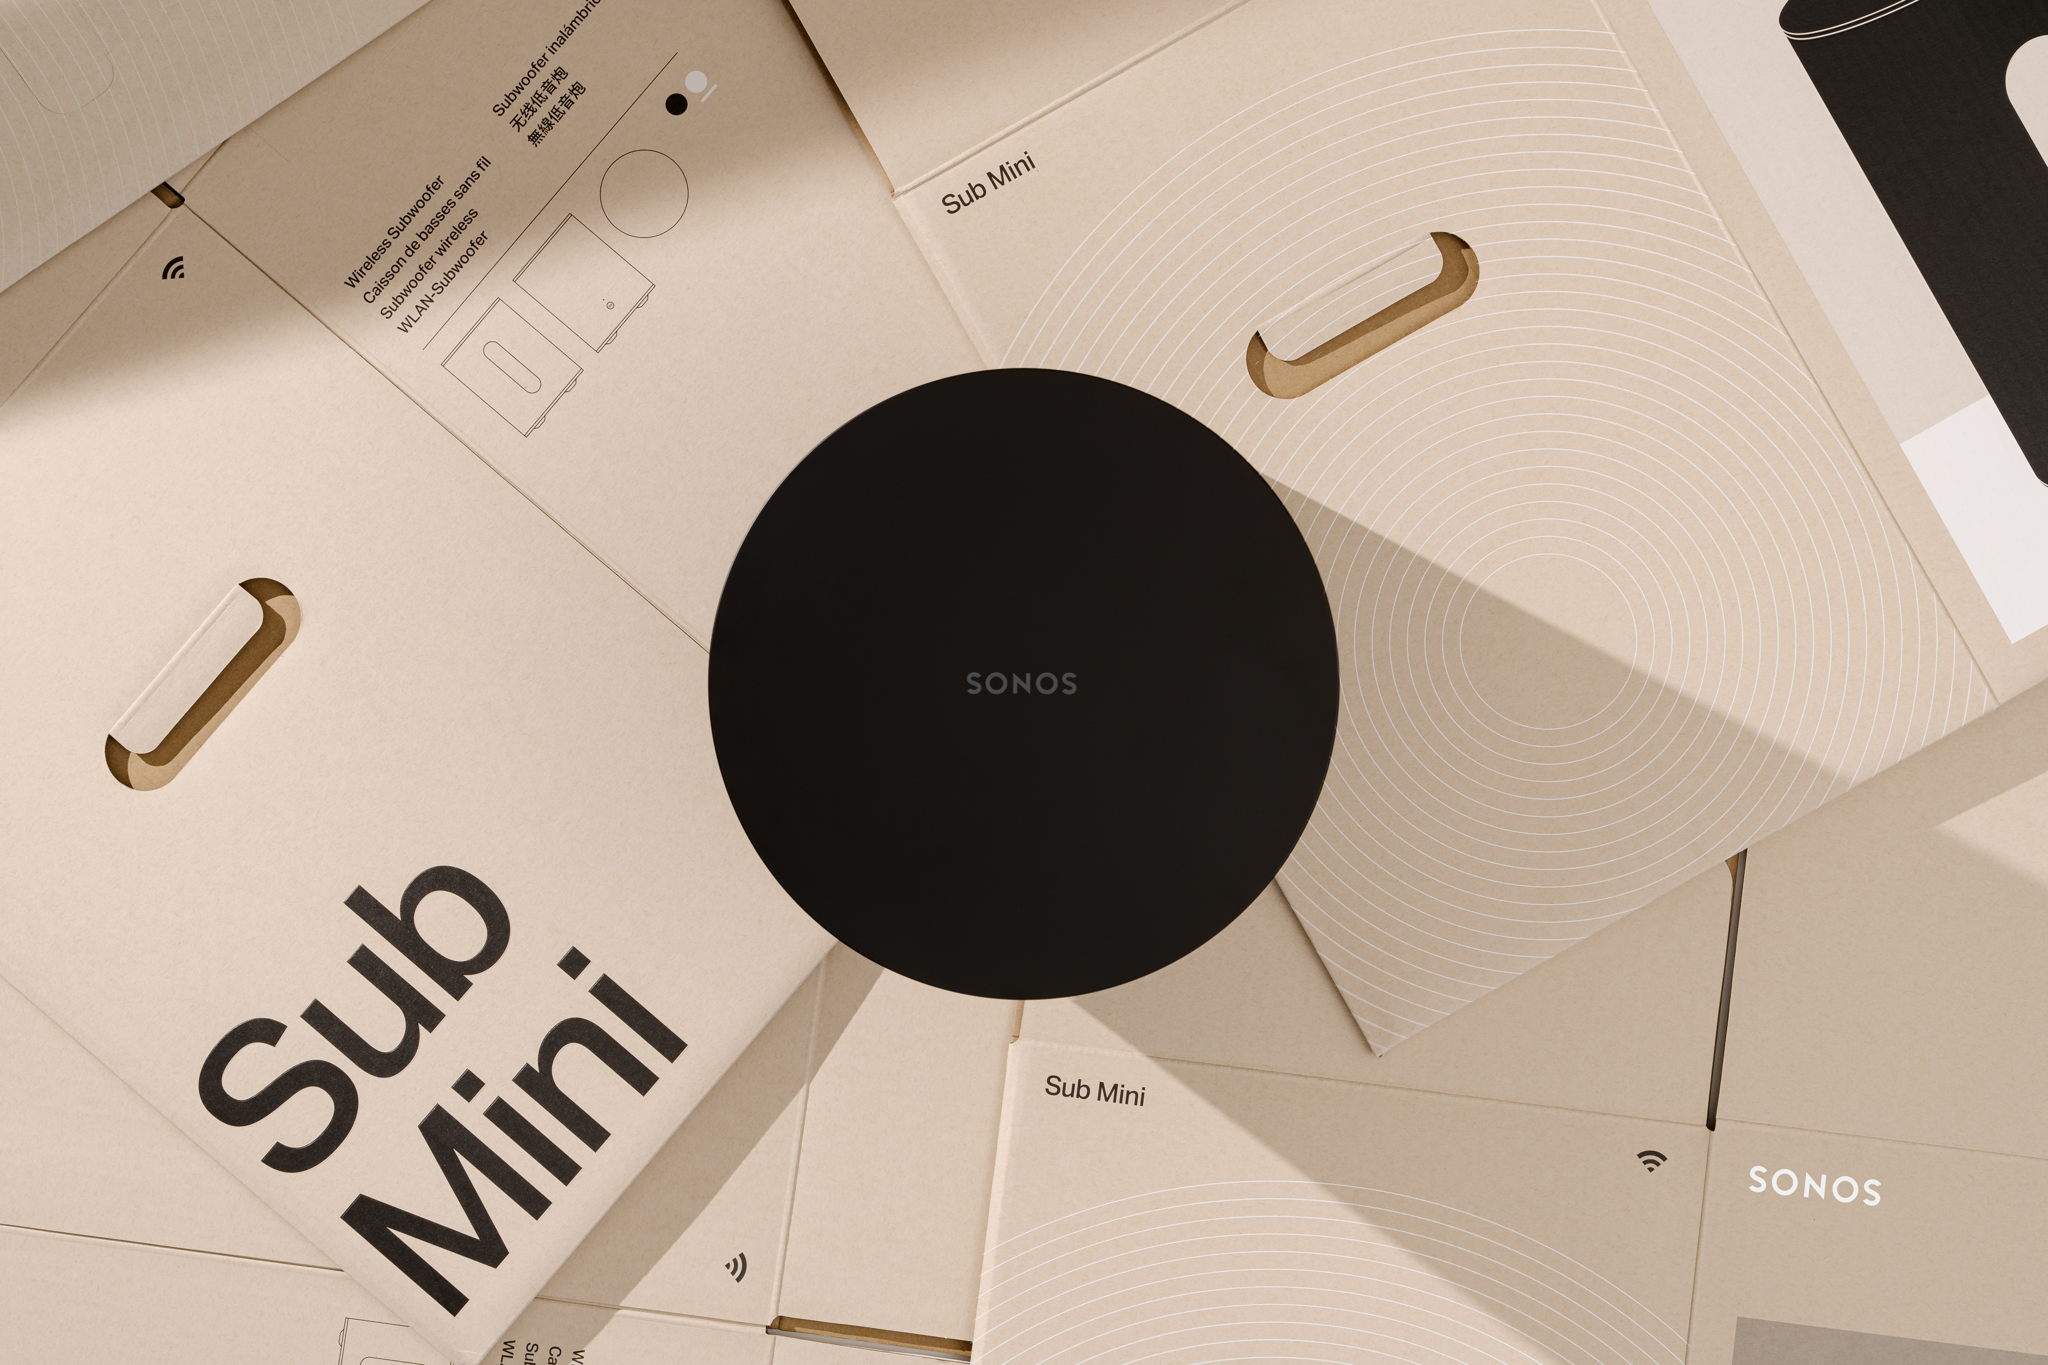 sonos-sub-mini-packaging-flat-pack-overhead-speaker-01.jpg